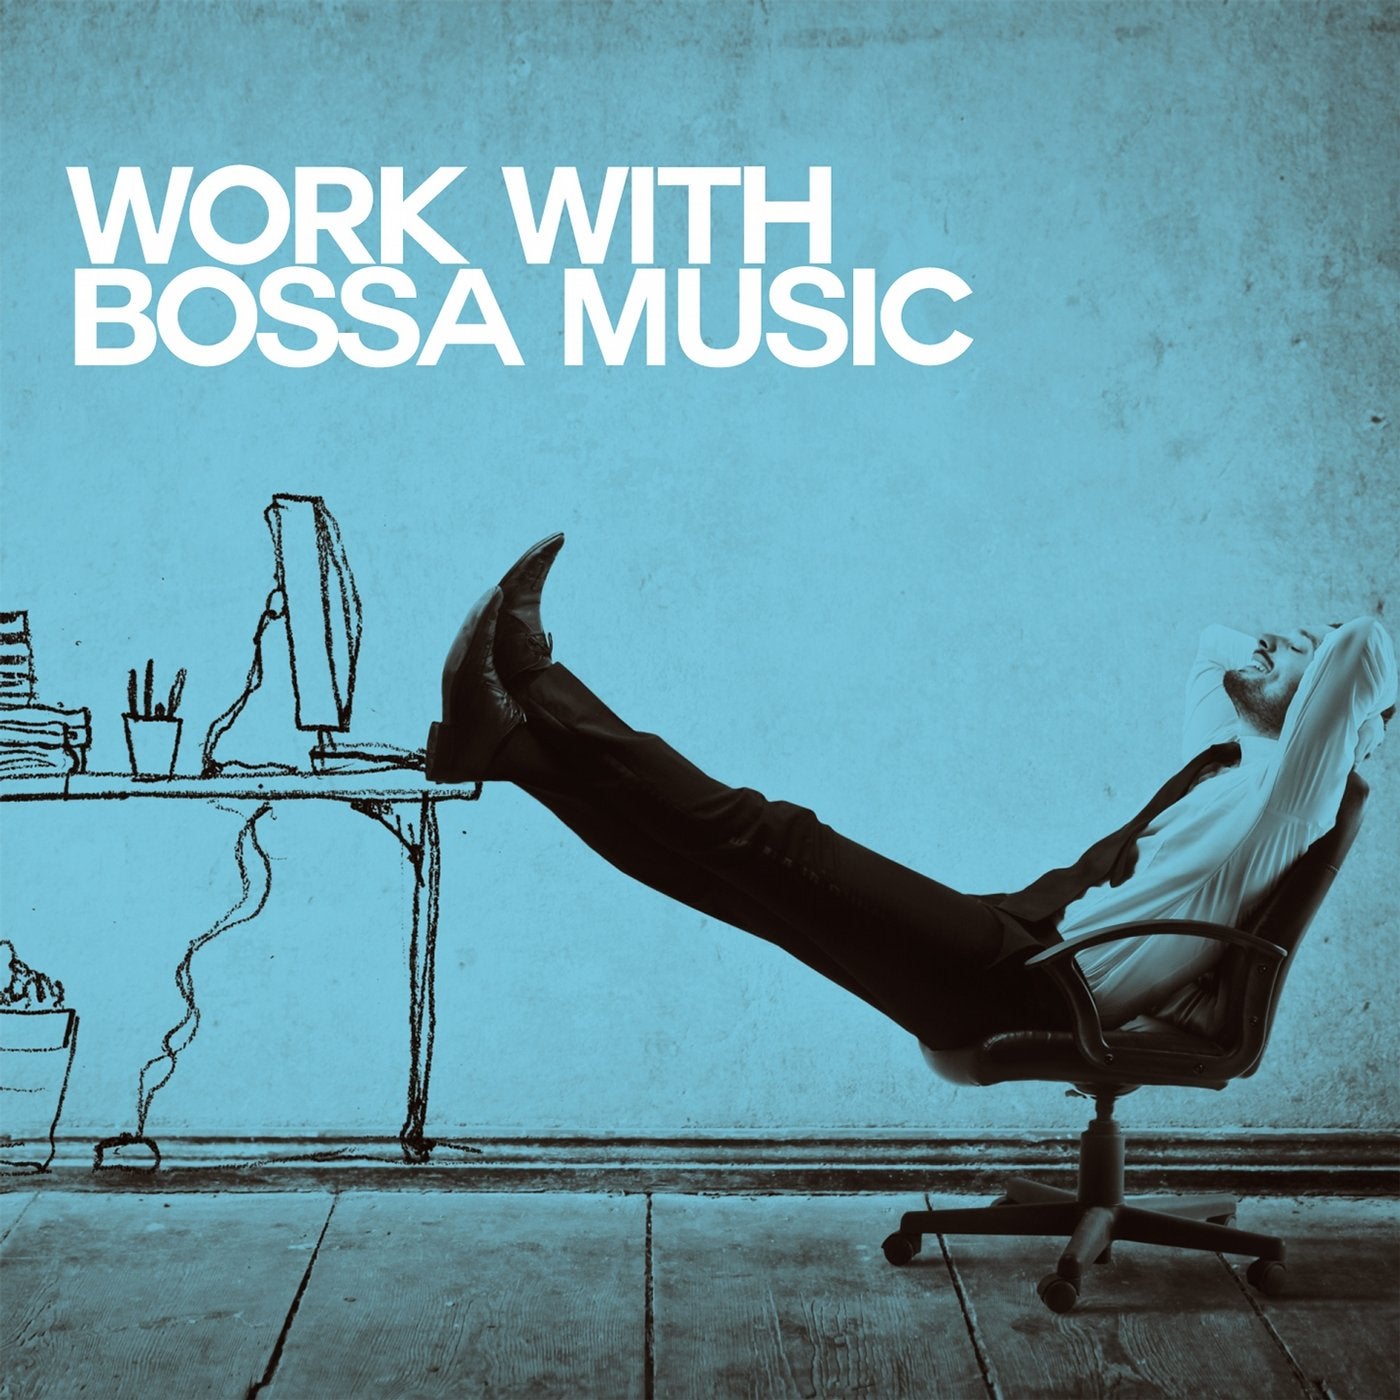 Work with Bossa Music